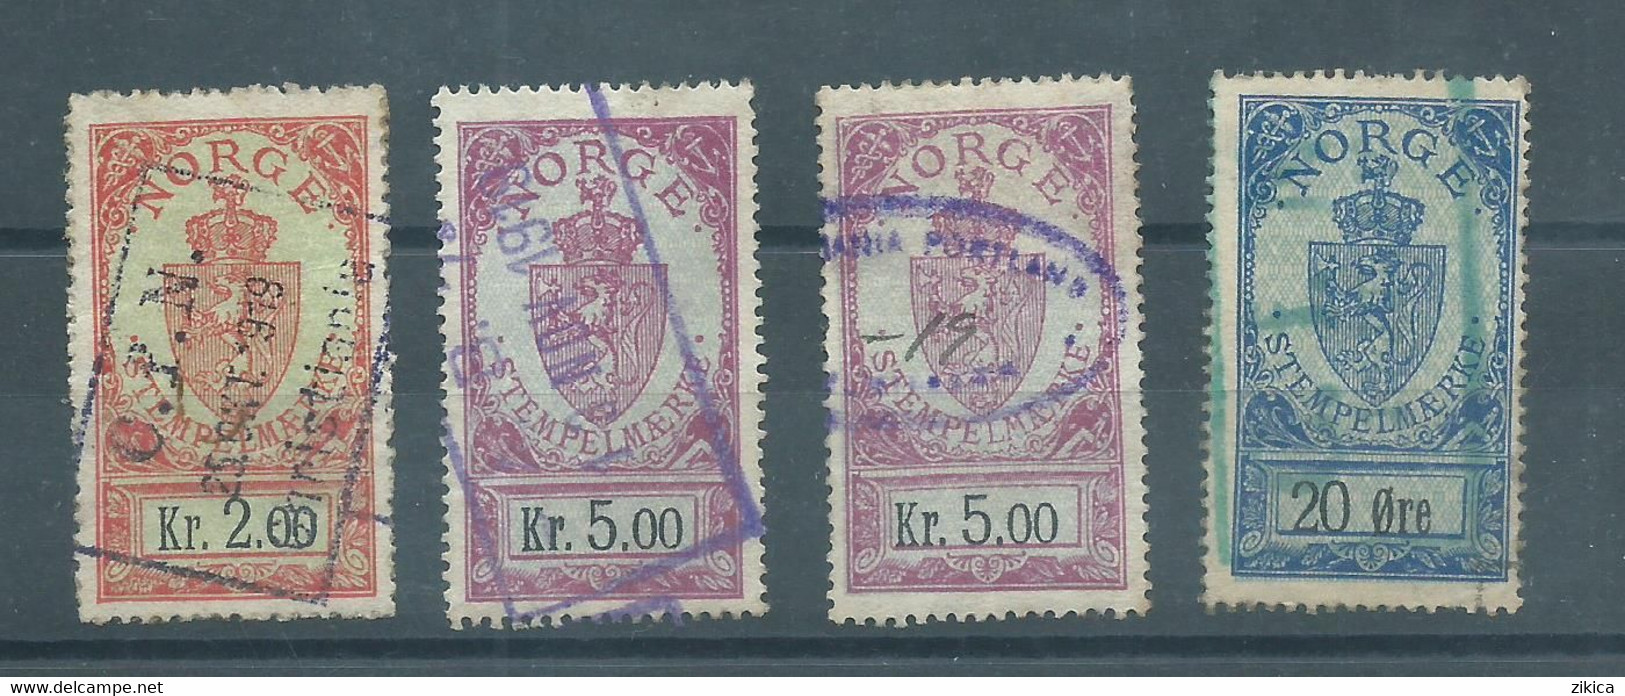 LOT 4 Stamps - NORWAY Norwegen Stempelmarke Documentary Stamps - Fiscales